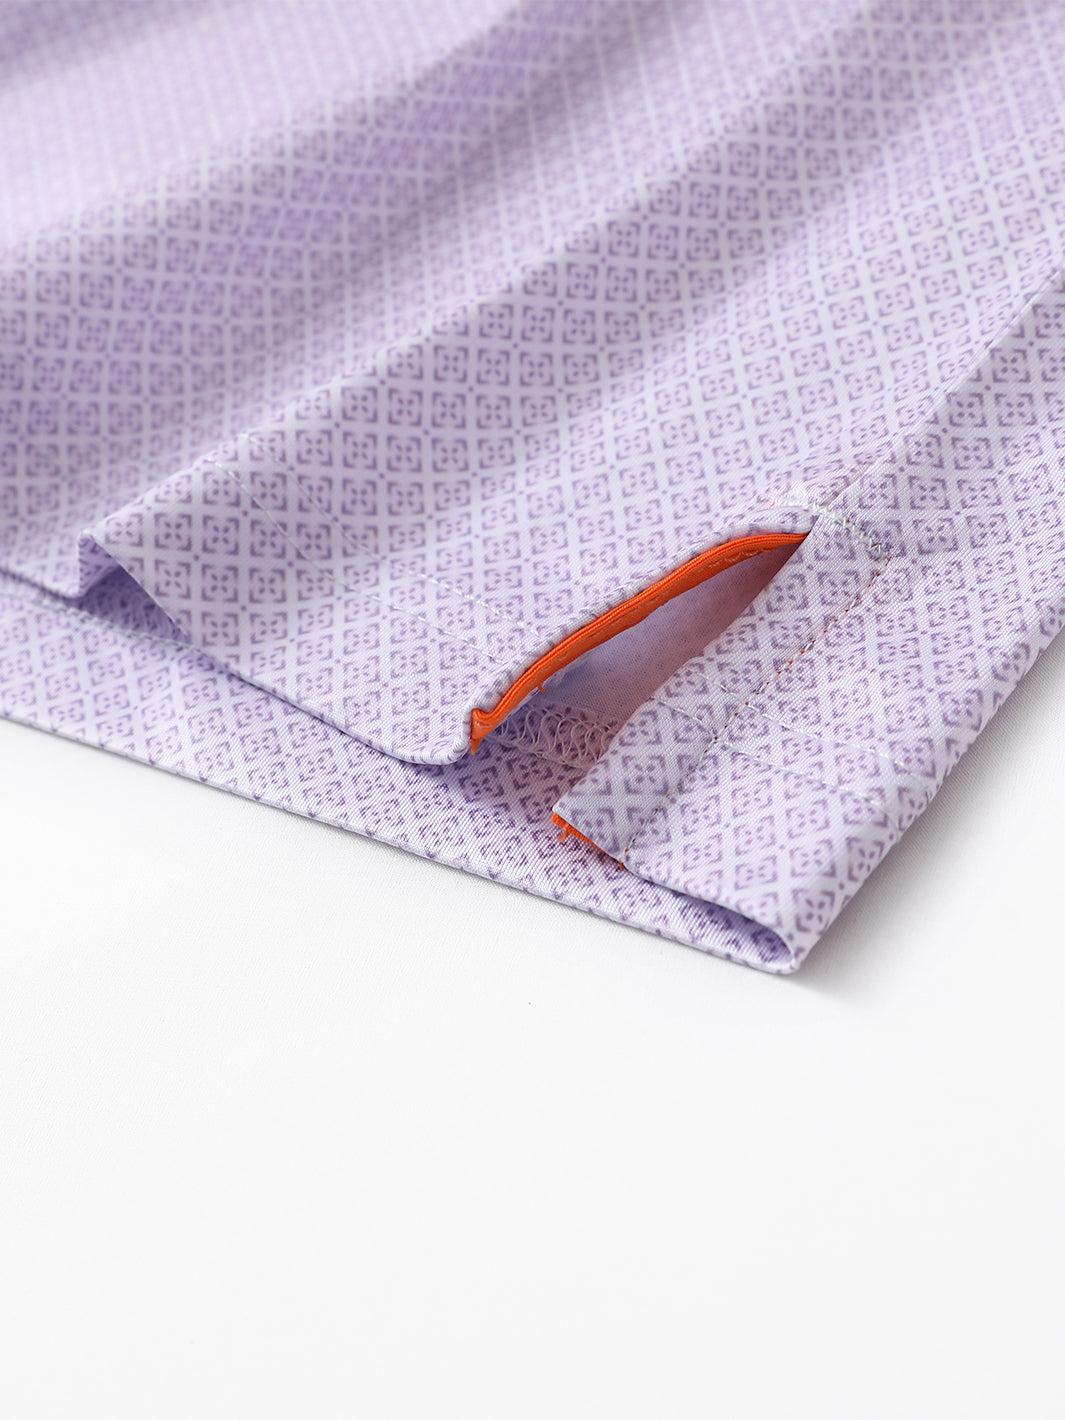 Men's Printed Golf Shirts-Lavender Button